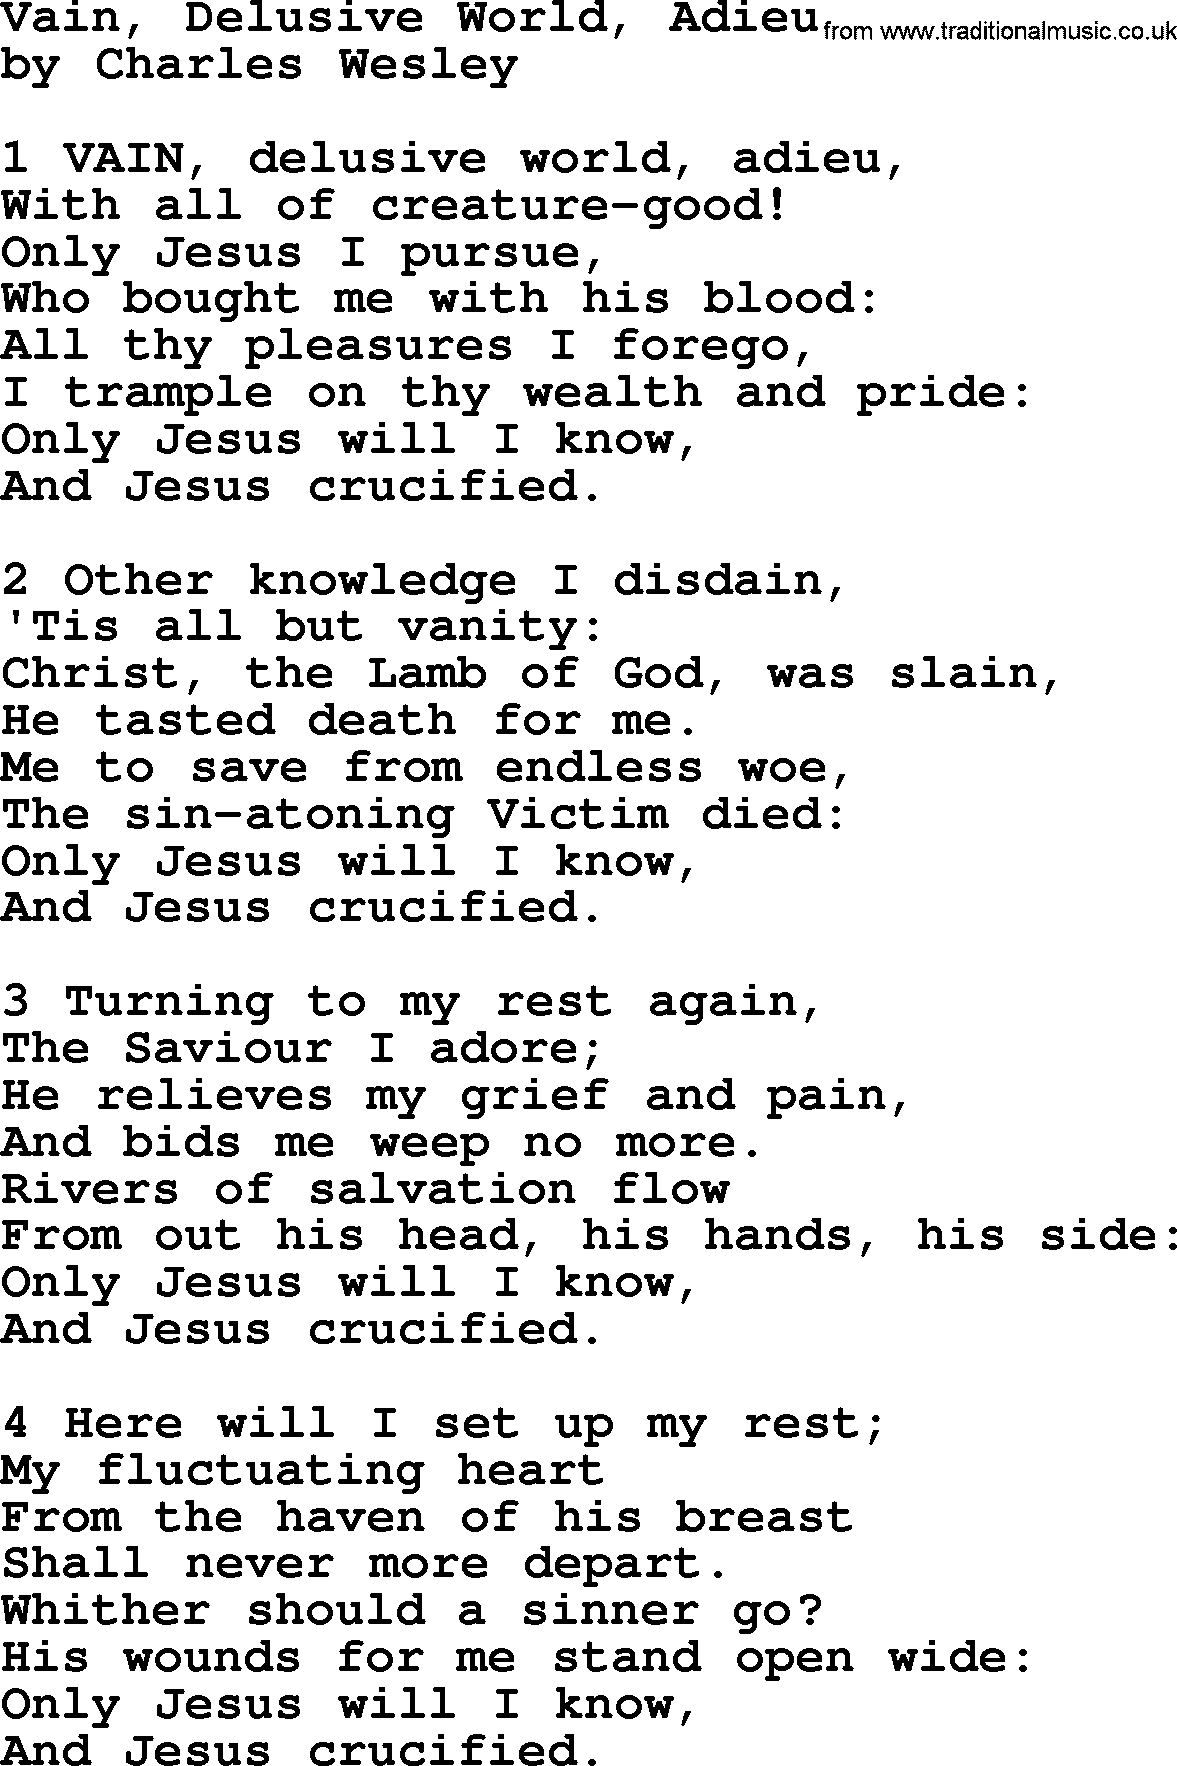 Charles Wesley hymn: Vain, Delusive World, Adieu, lyrics